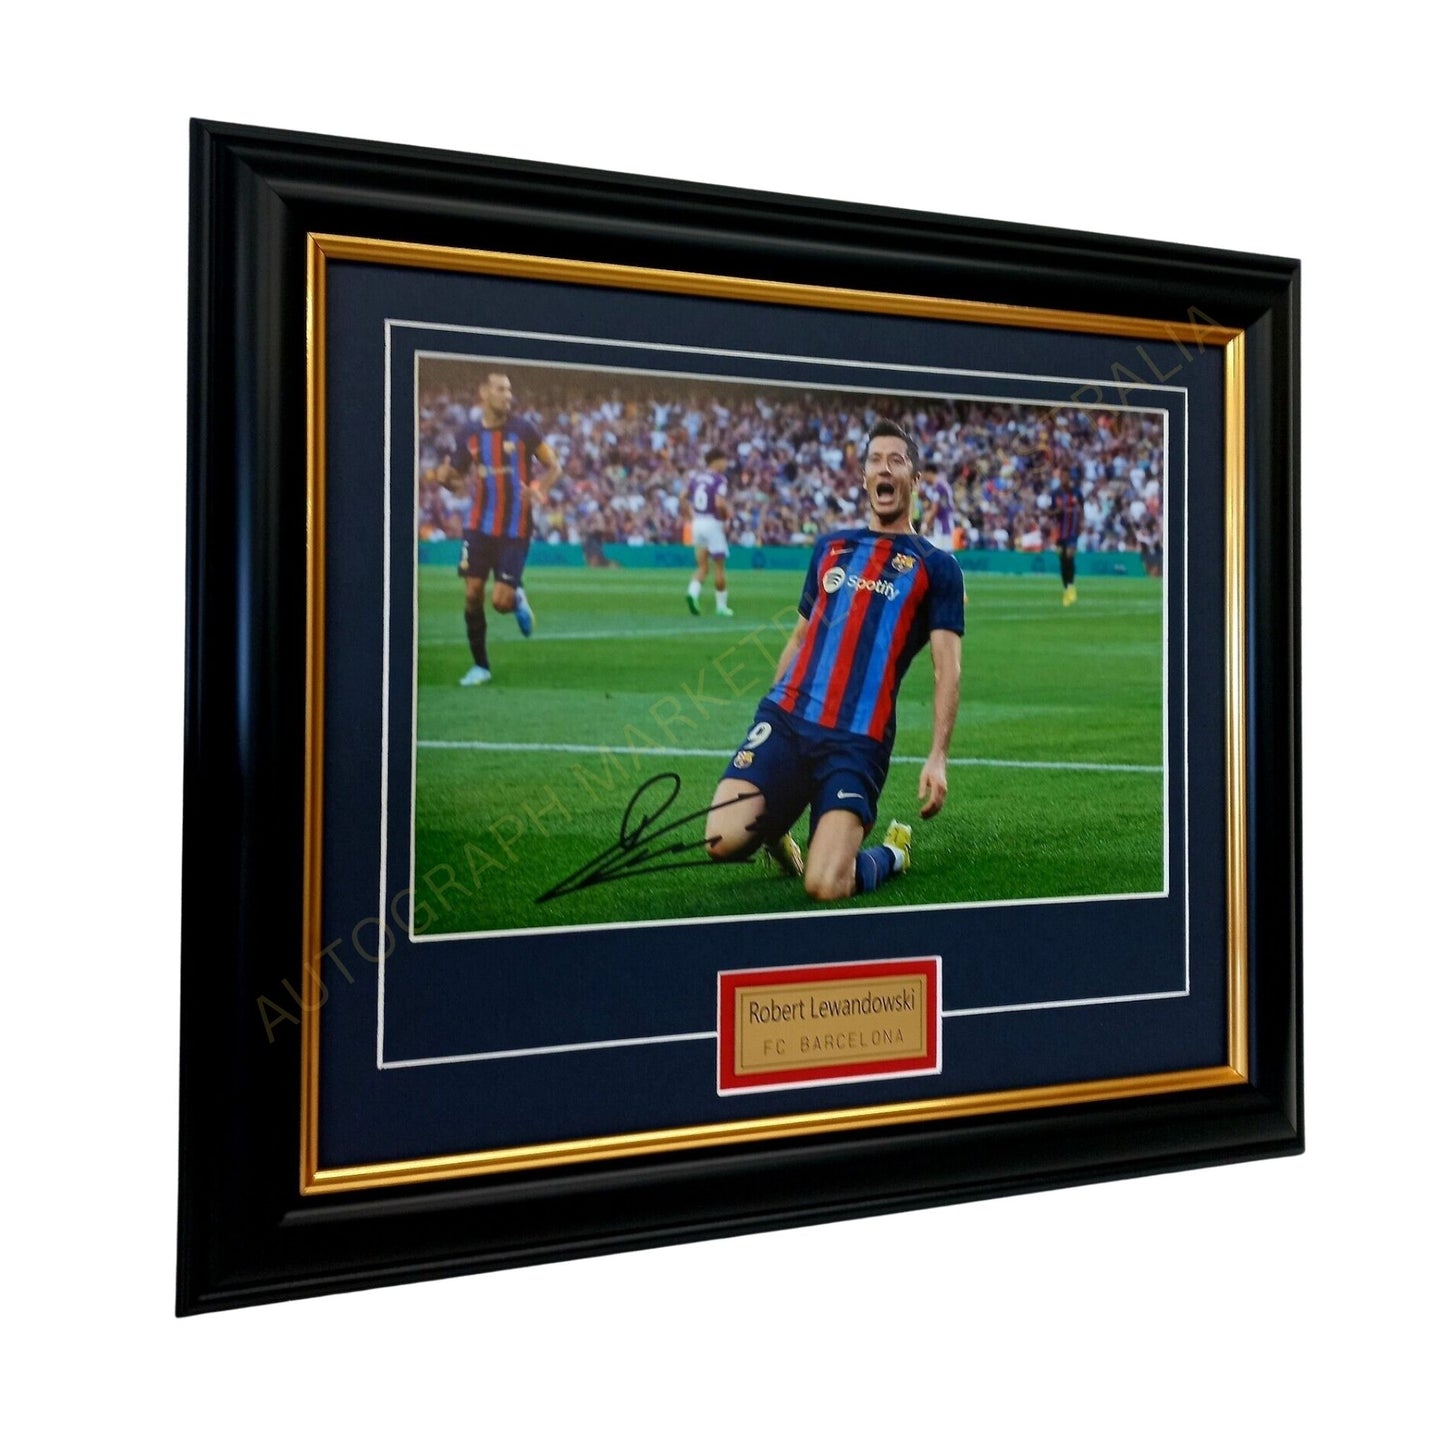 Robert Lewandowski Signed Photo Framed FC BARCELONA Soccer Memorabilia